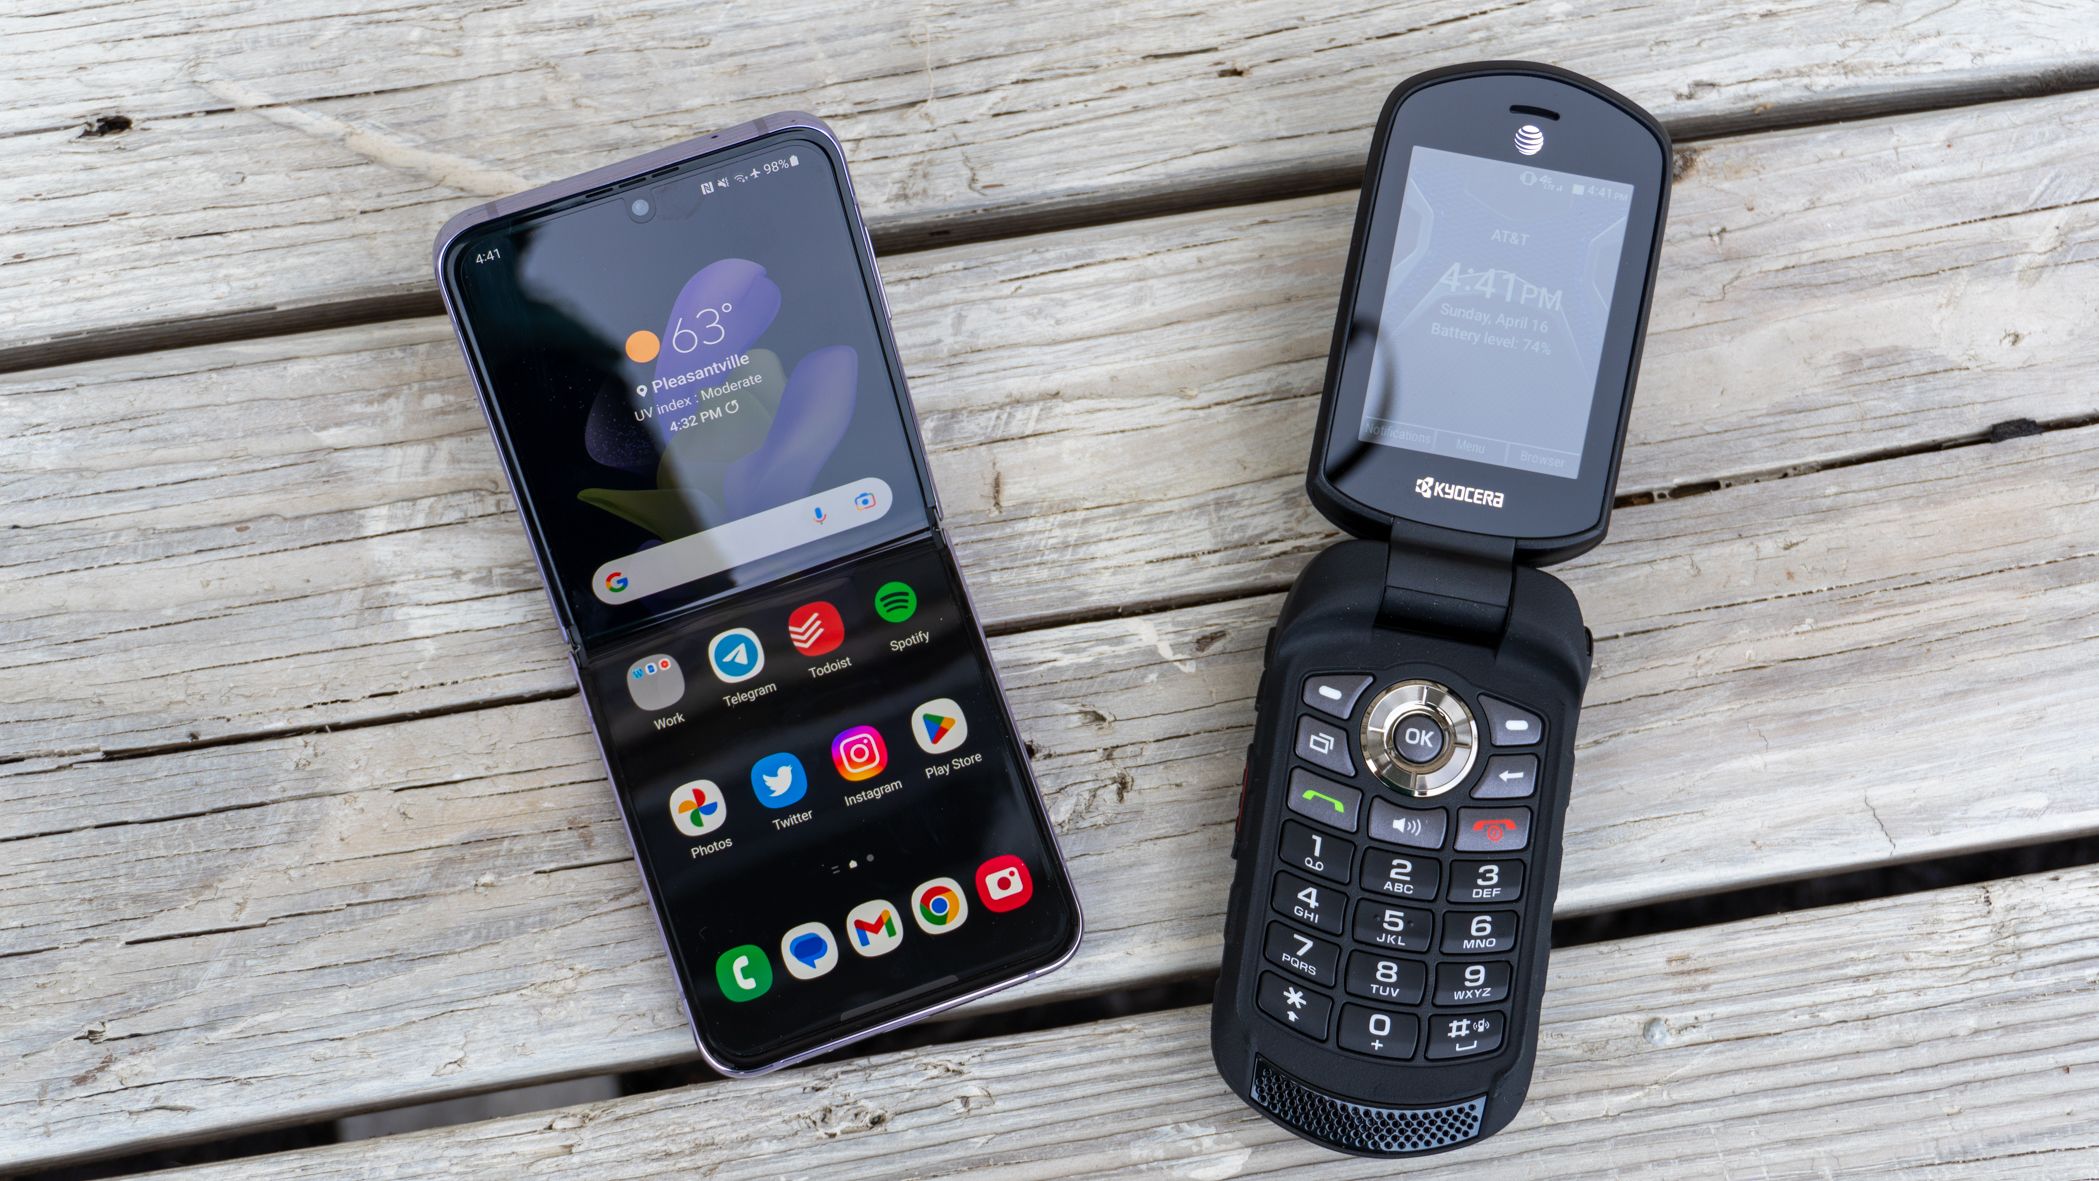 Galaxy Z Flip 4 vs. Kyocera DuraXE: Which is the best flip phone?